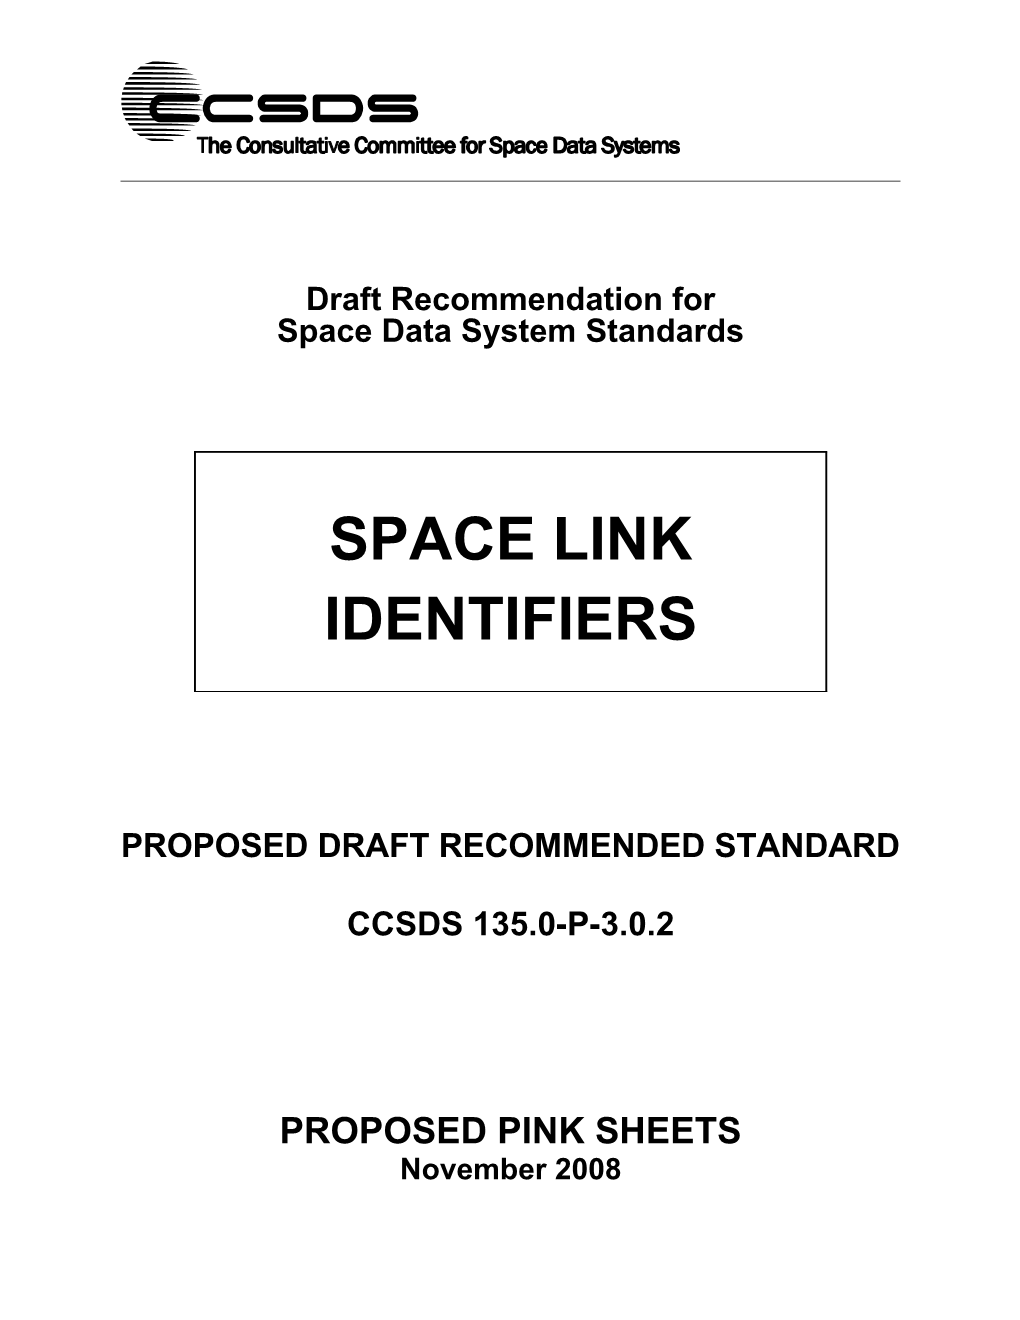 Space Link Identifiers